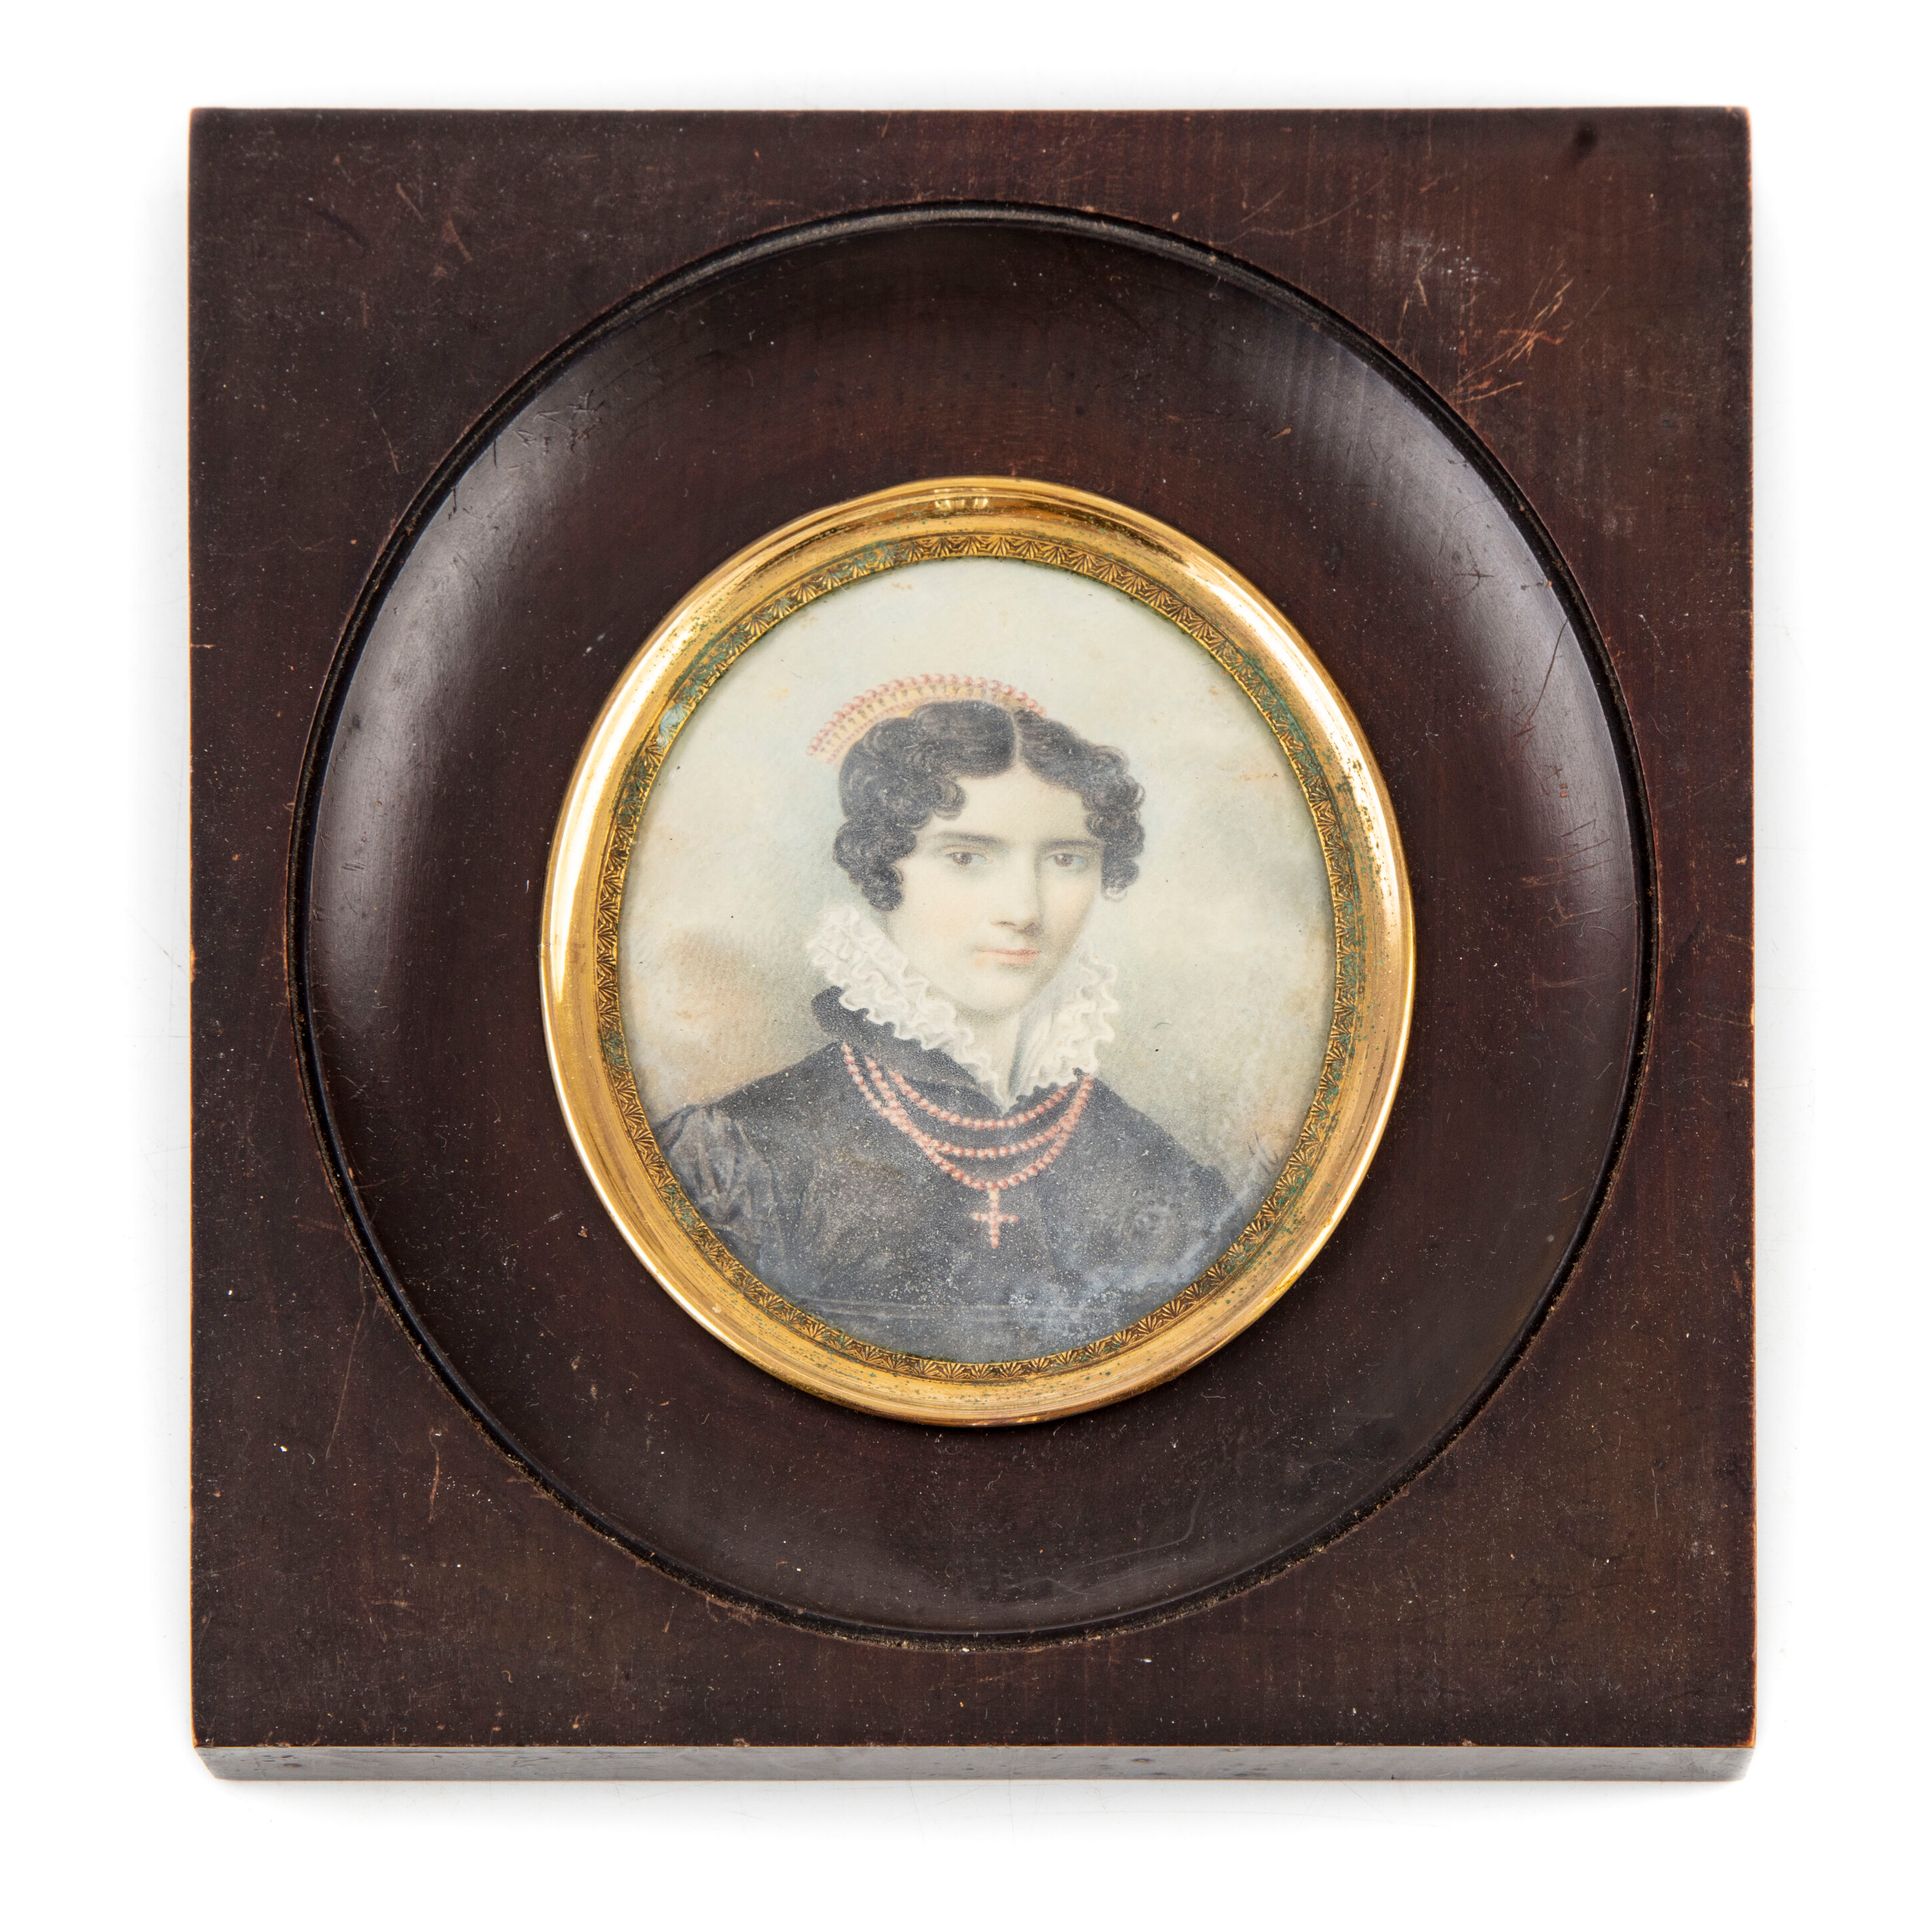 ECOLE FRANCAISE XIXè FRENCH SCHOOL circa 1820

Portrait of a woman with a neckla&hellip;